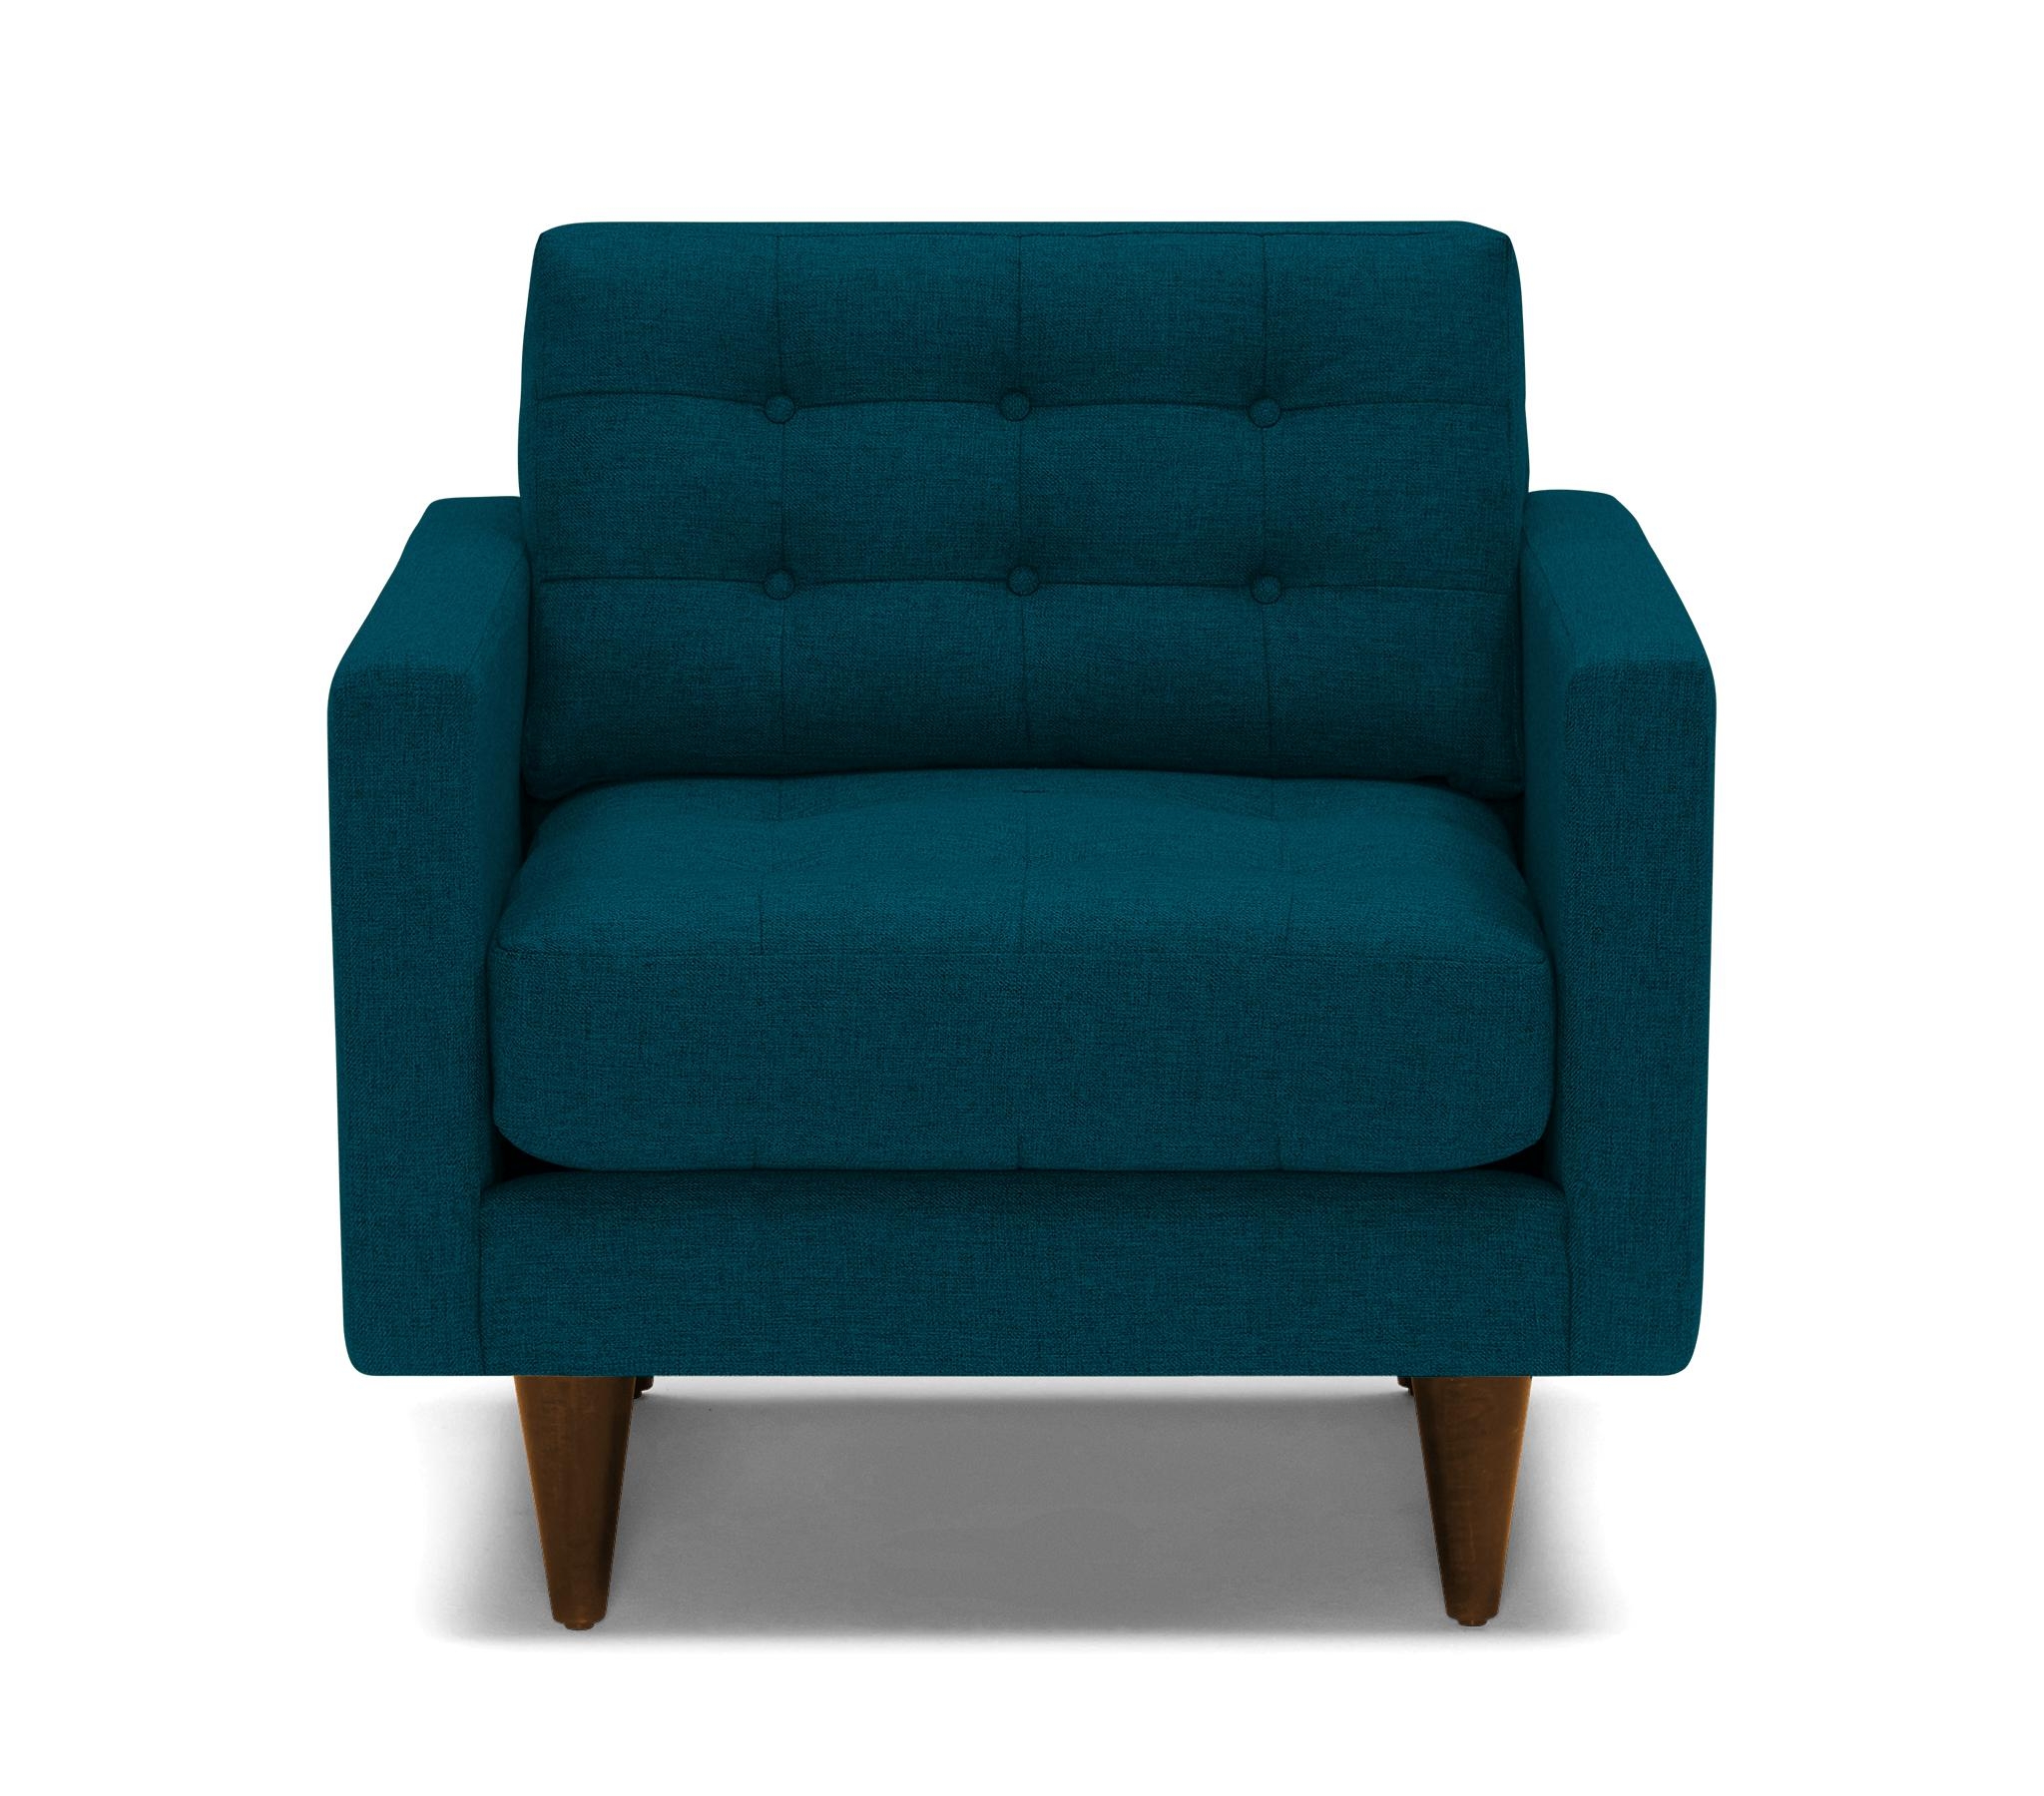 Blue Eliot Mid Century Modern Apartment Chair - Key Largo Zenith Teal - Mocha - Image 0